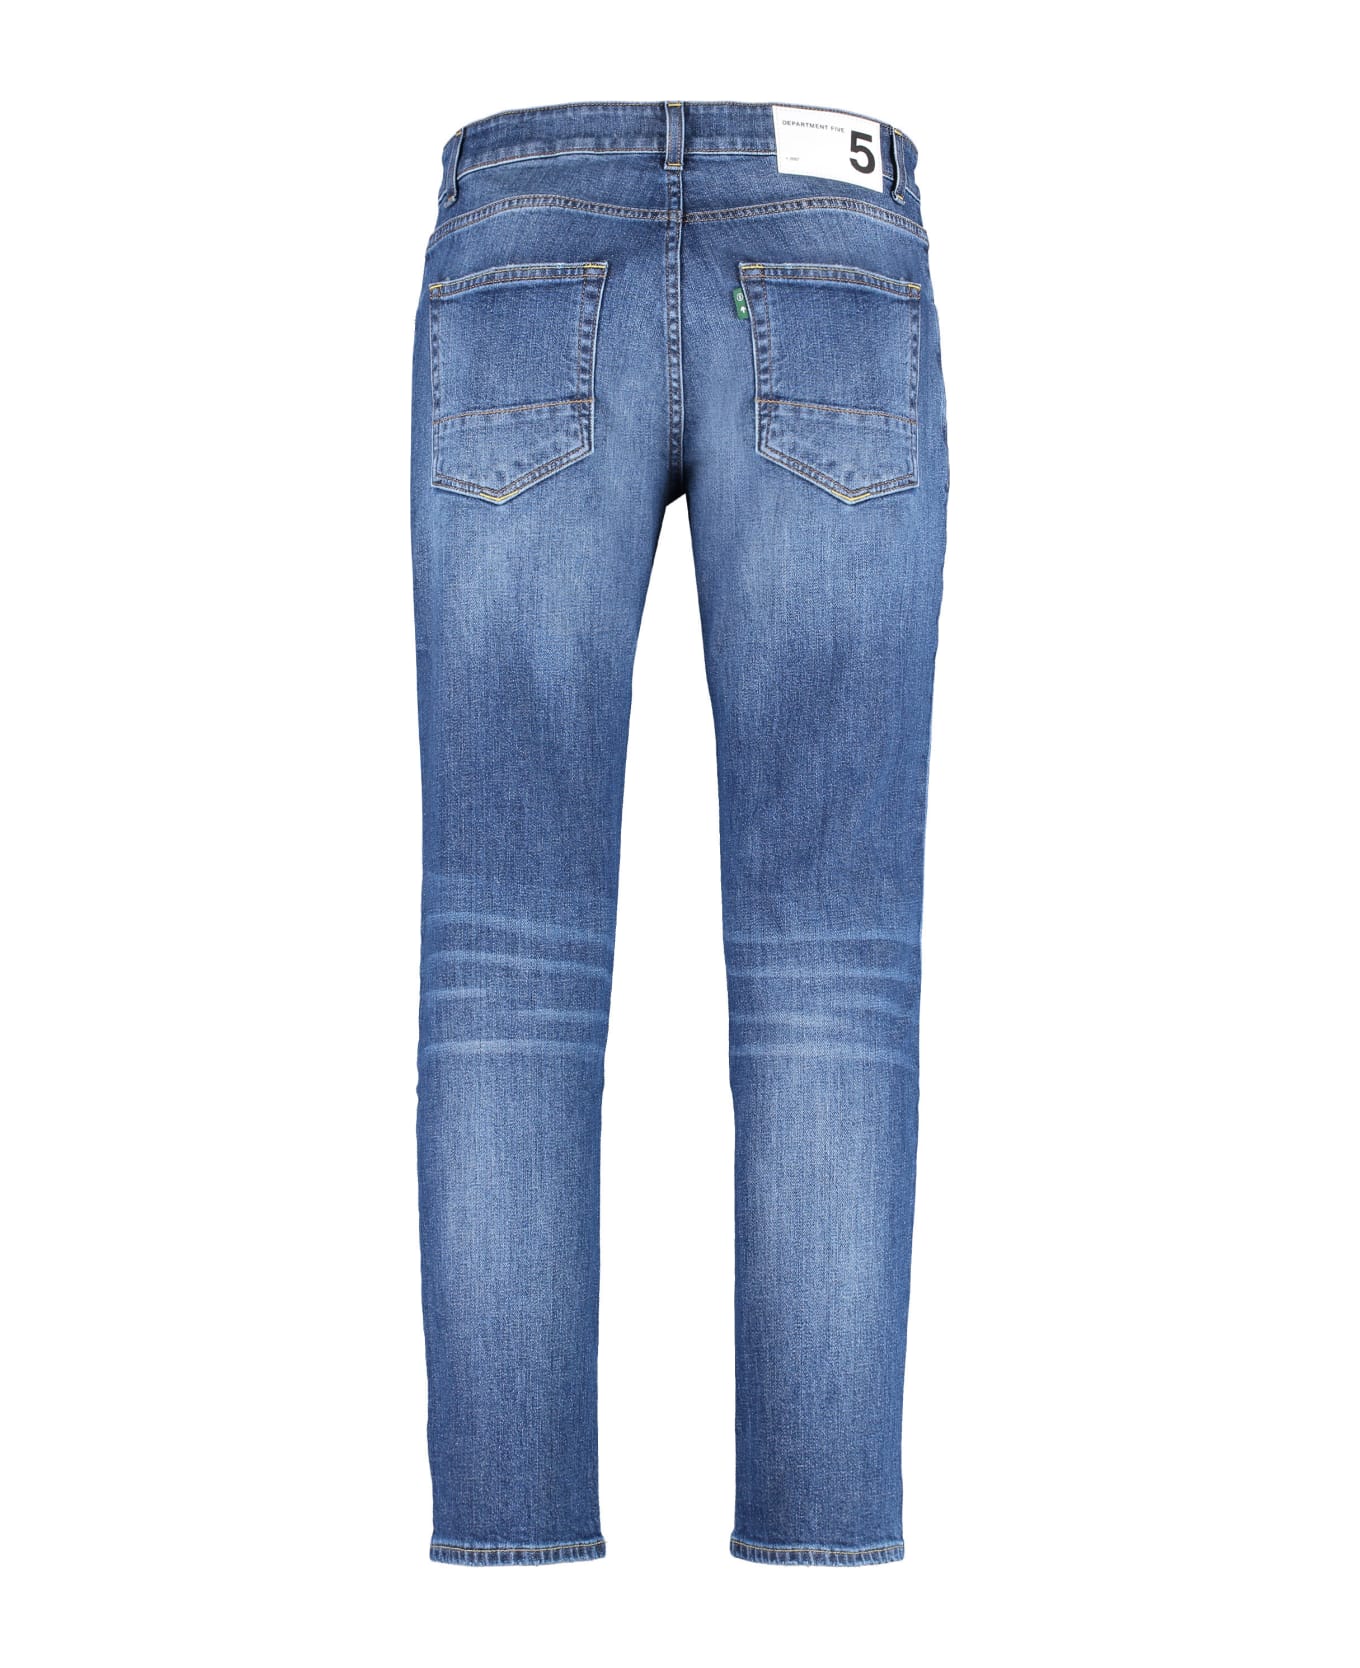 Department Five Corkey Slim Fit Jeans - Denim